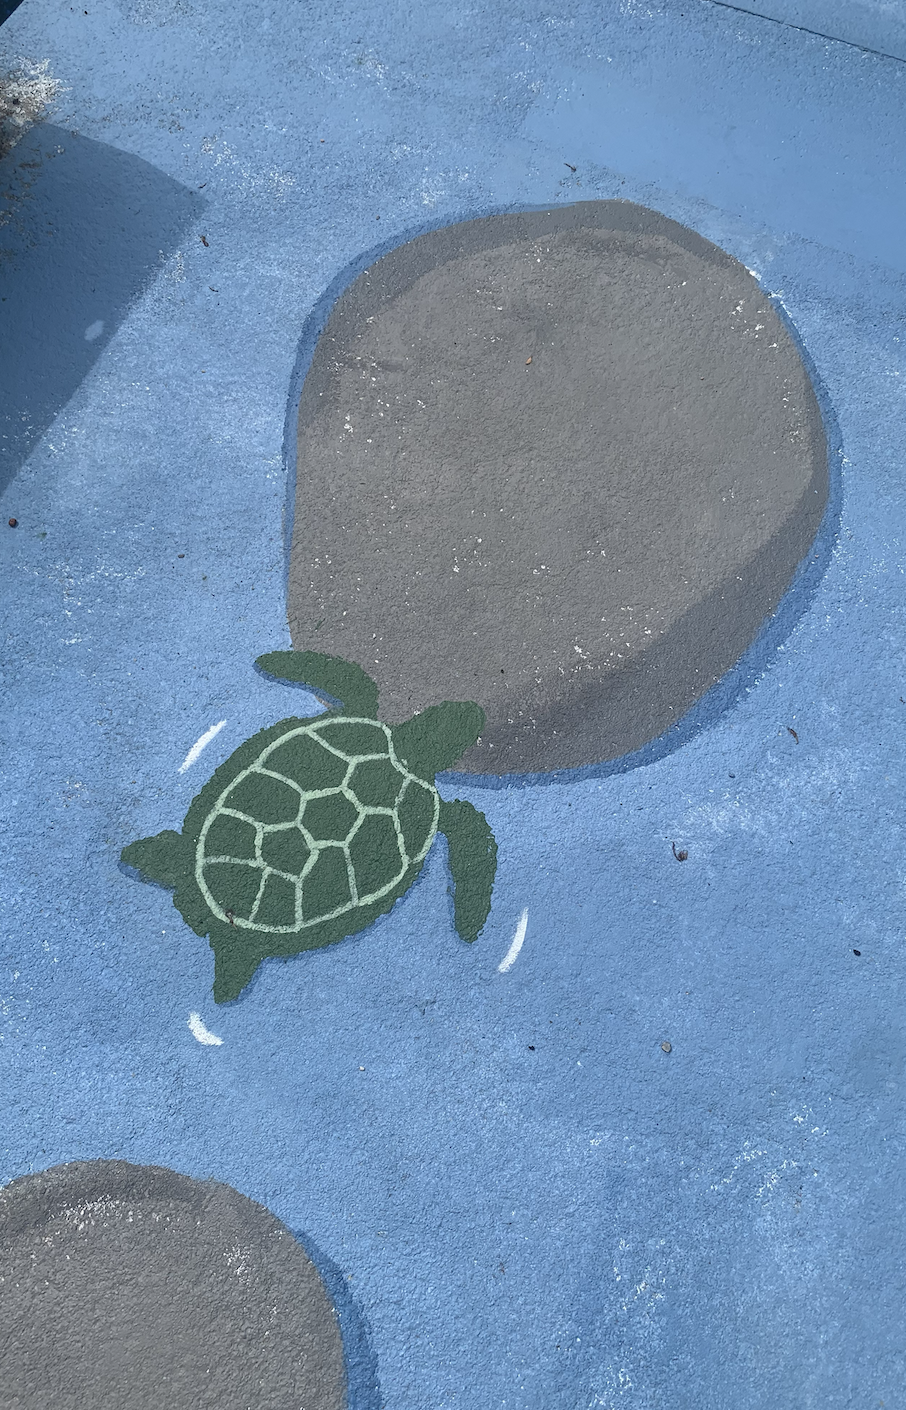 Turtle on the floor of the community garden